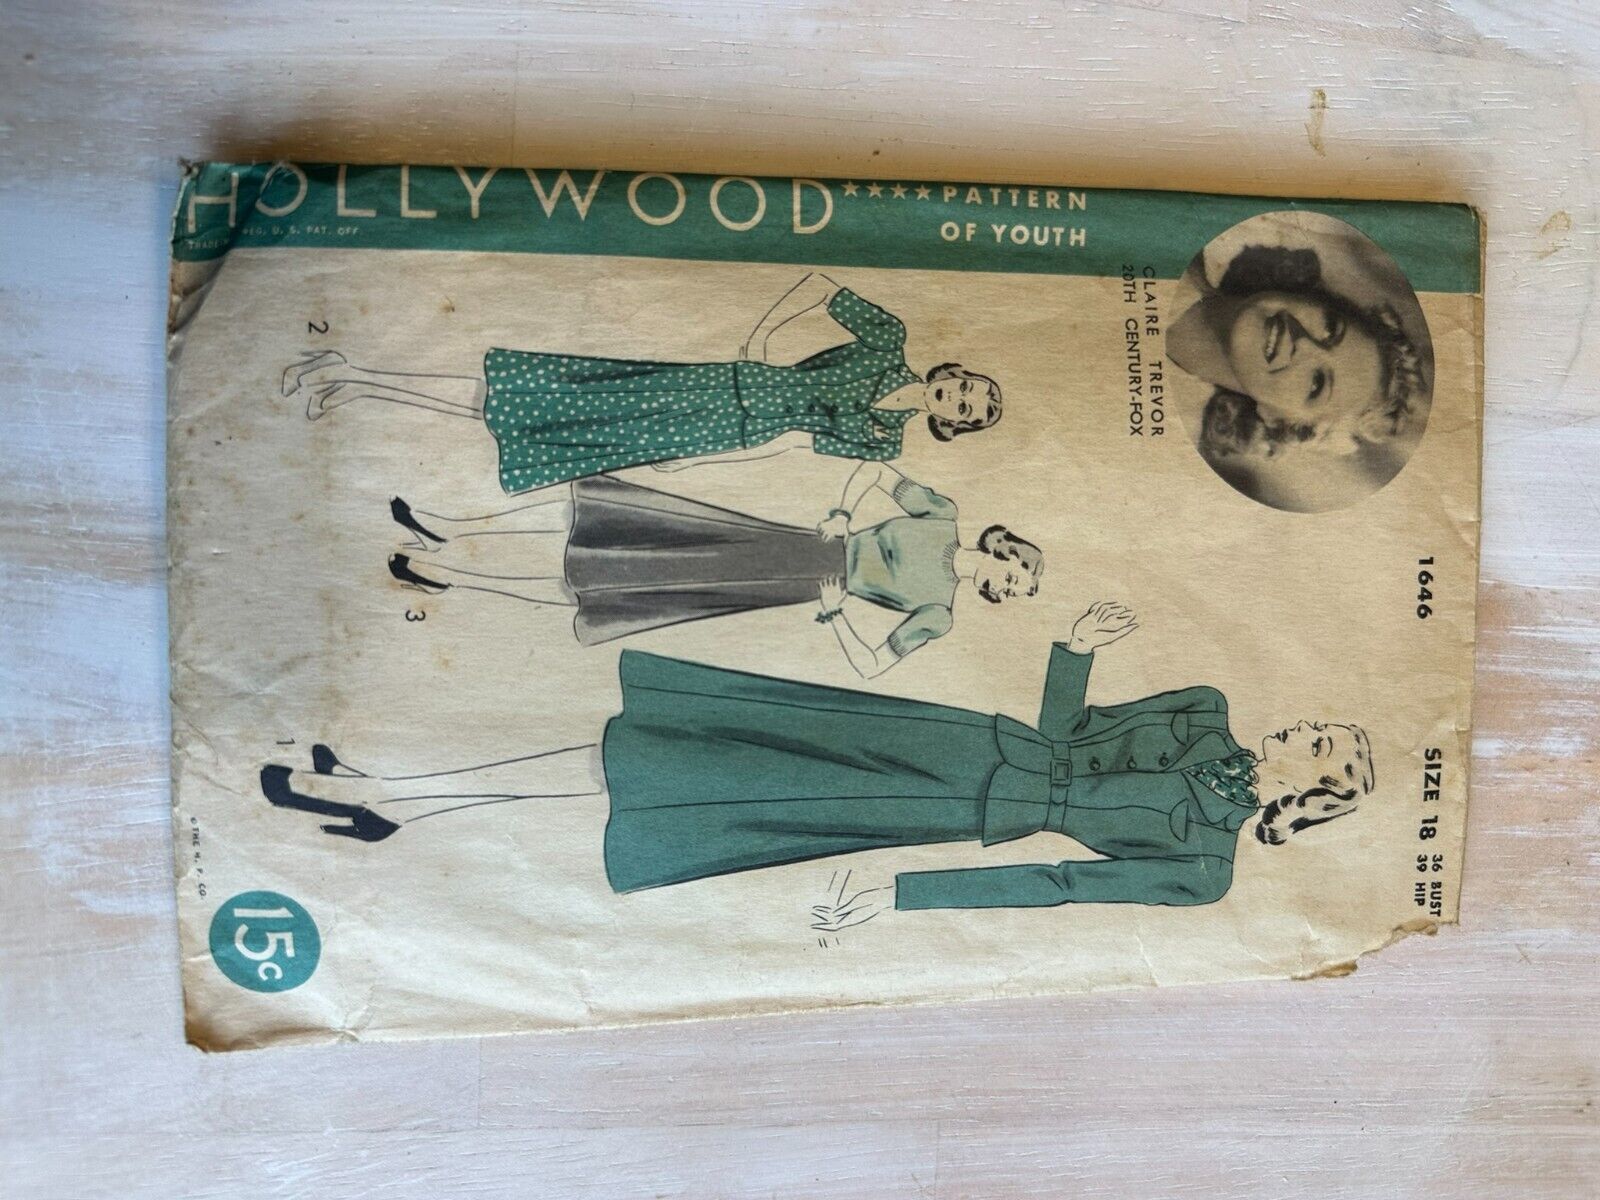 1940s Claire Trevor Hollywood Pattern #1646, Vintage Dress.